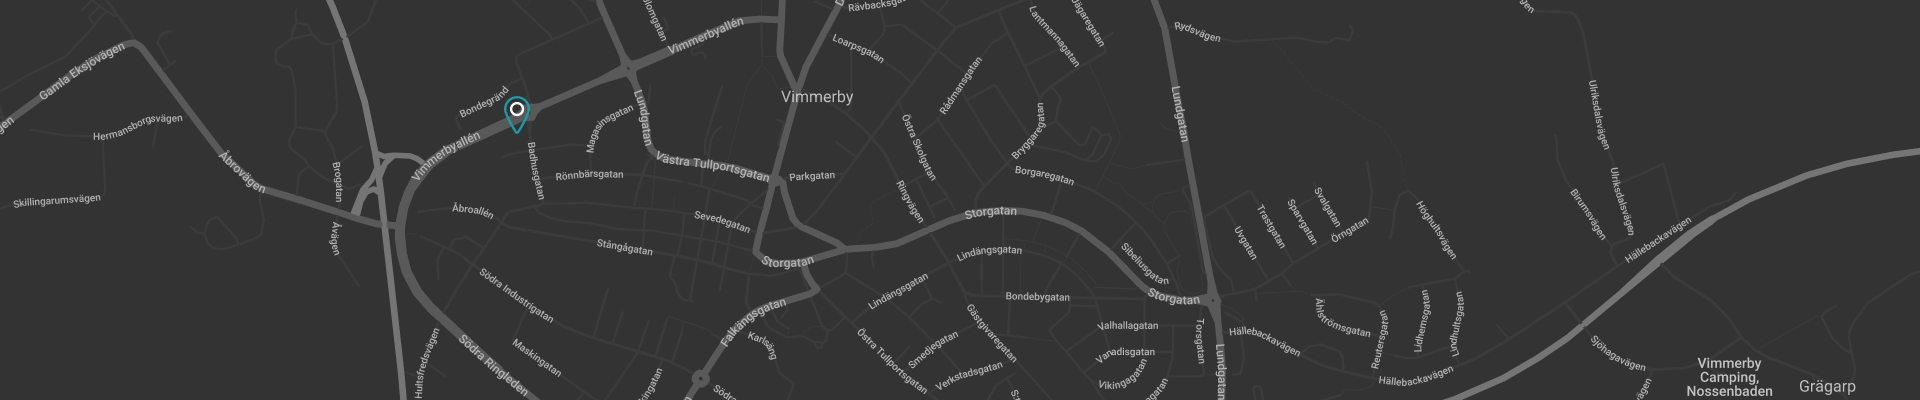 Landrins Bil Vimmerby - Karta